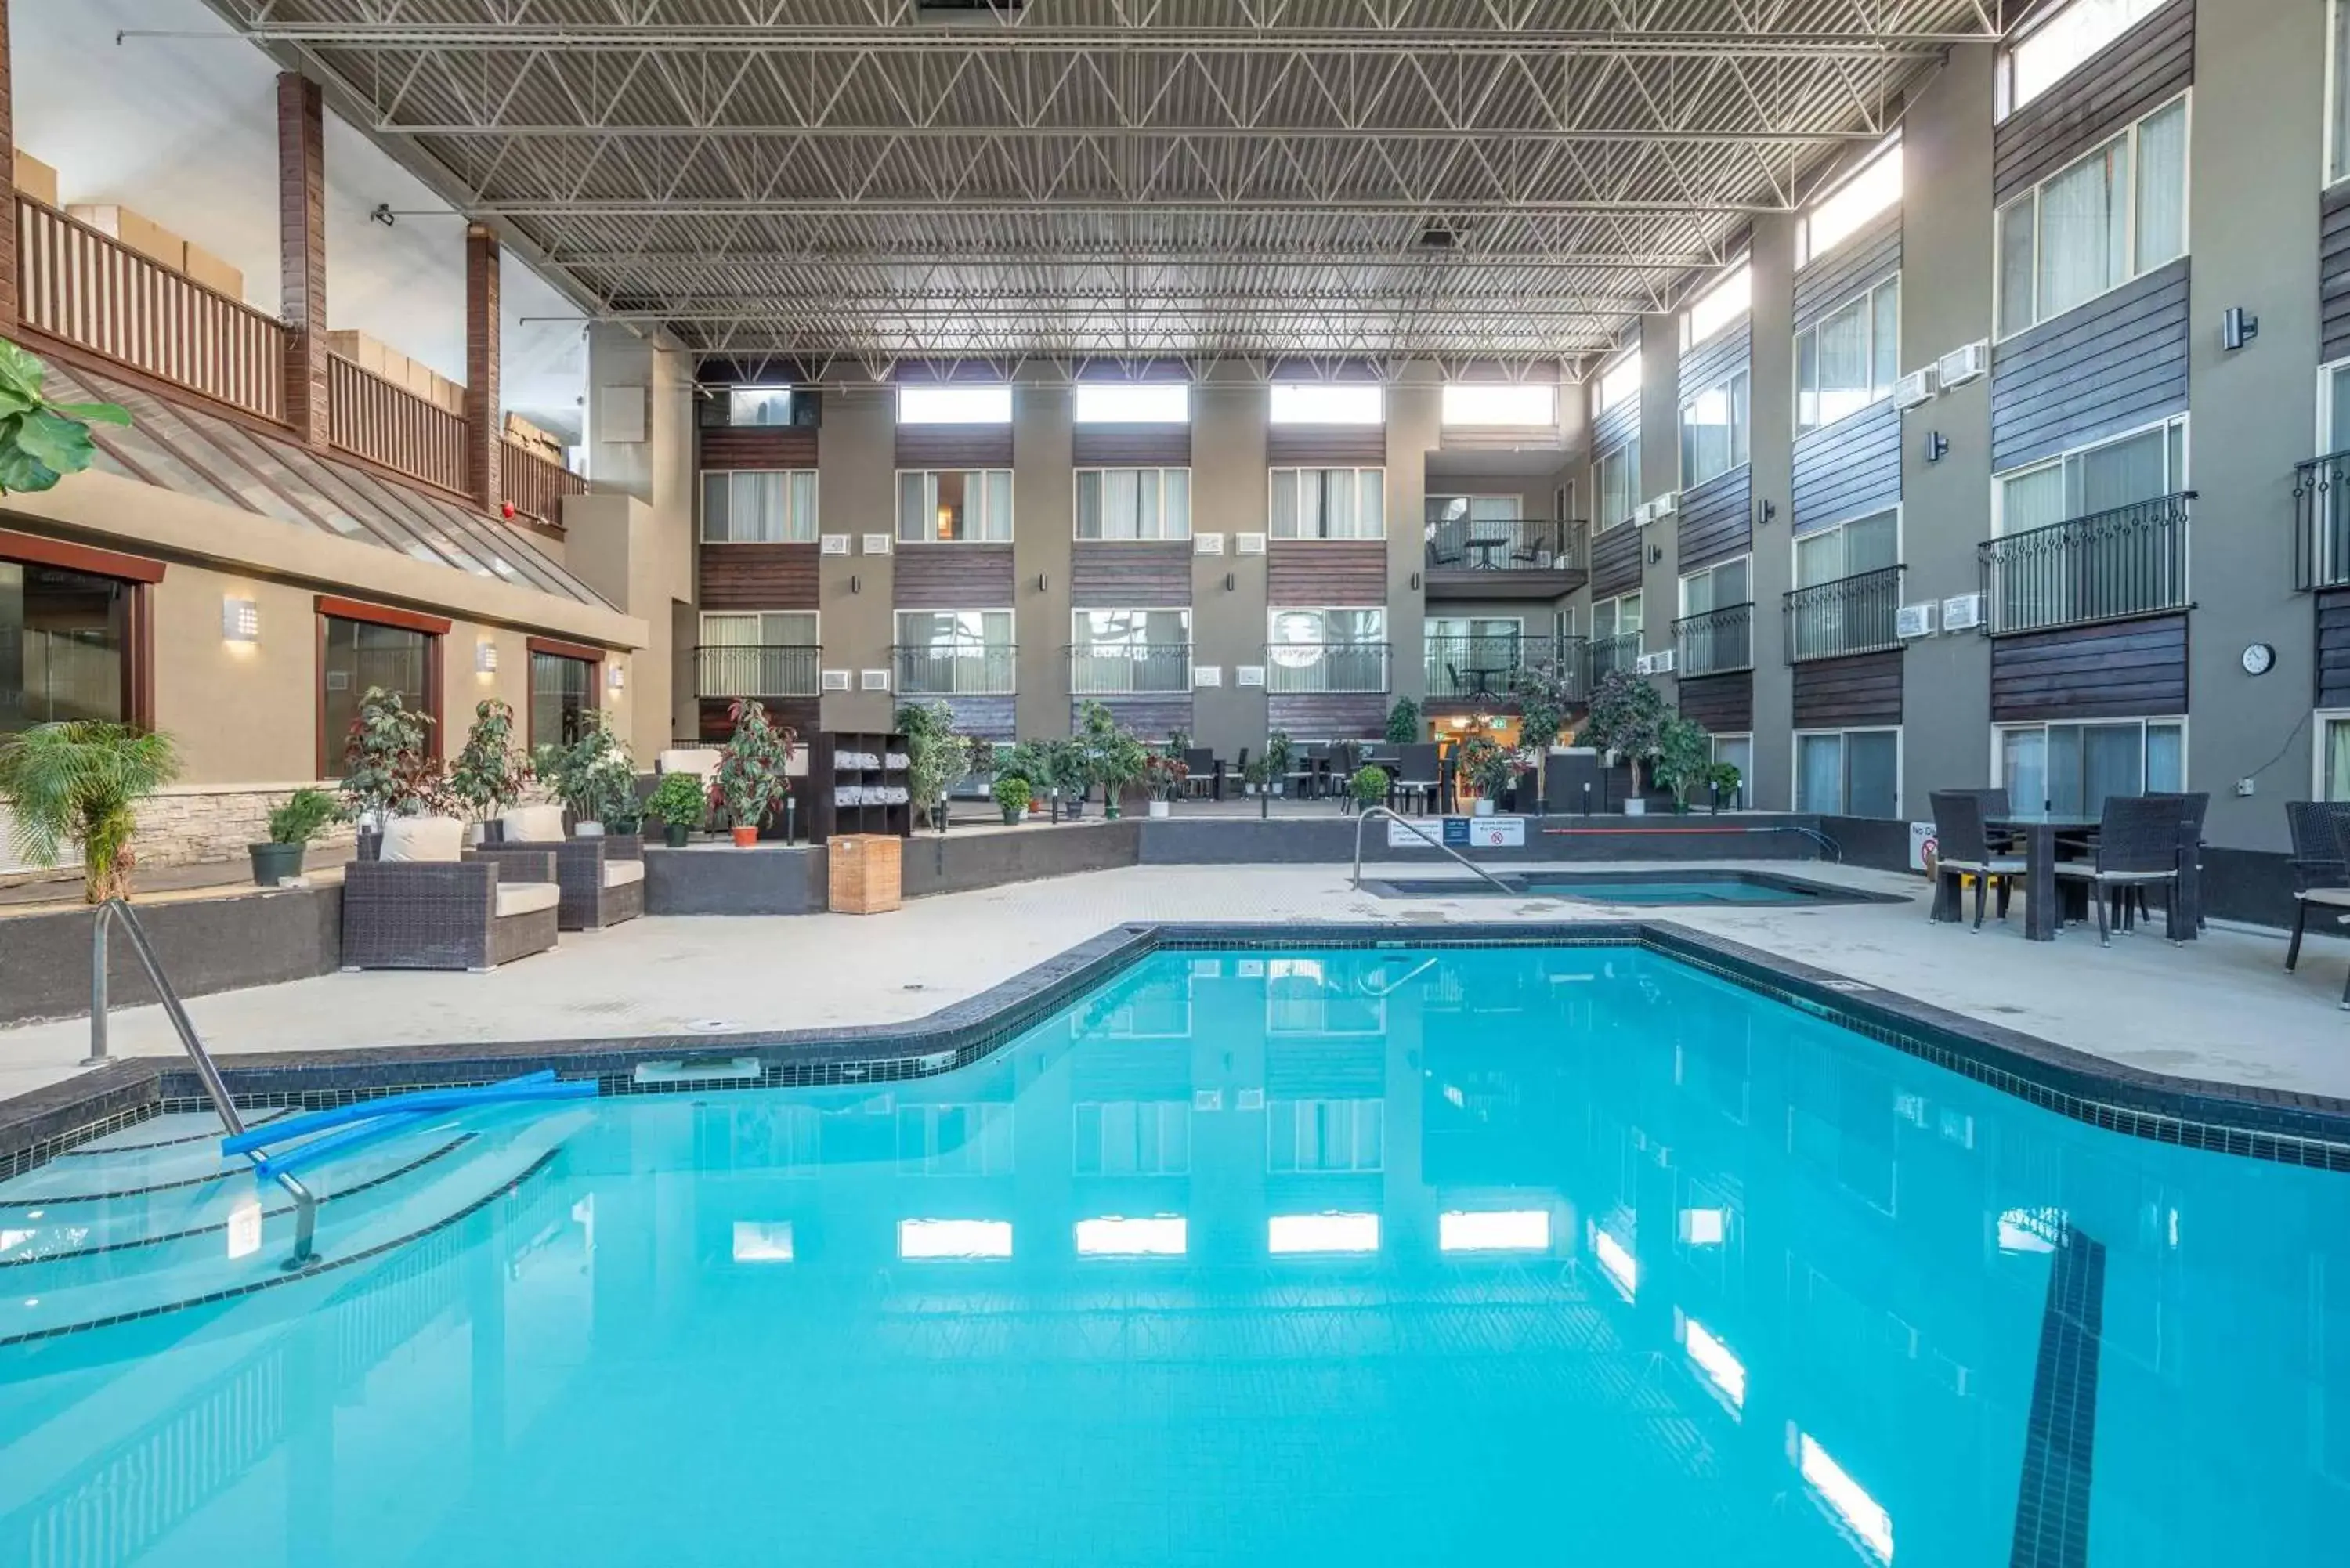 Swimming pool in Sandman Hotel Edmonton West